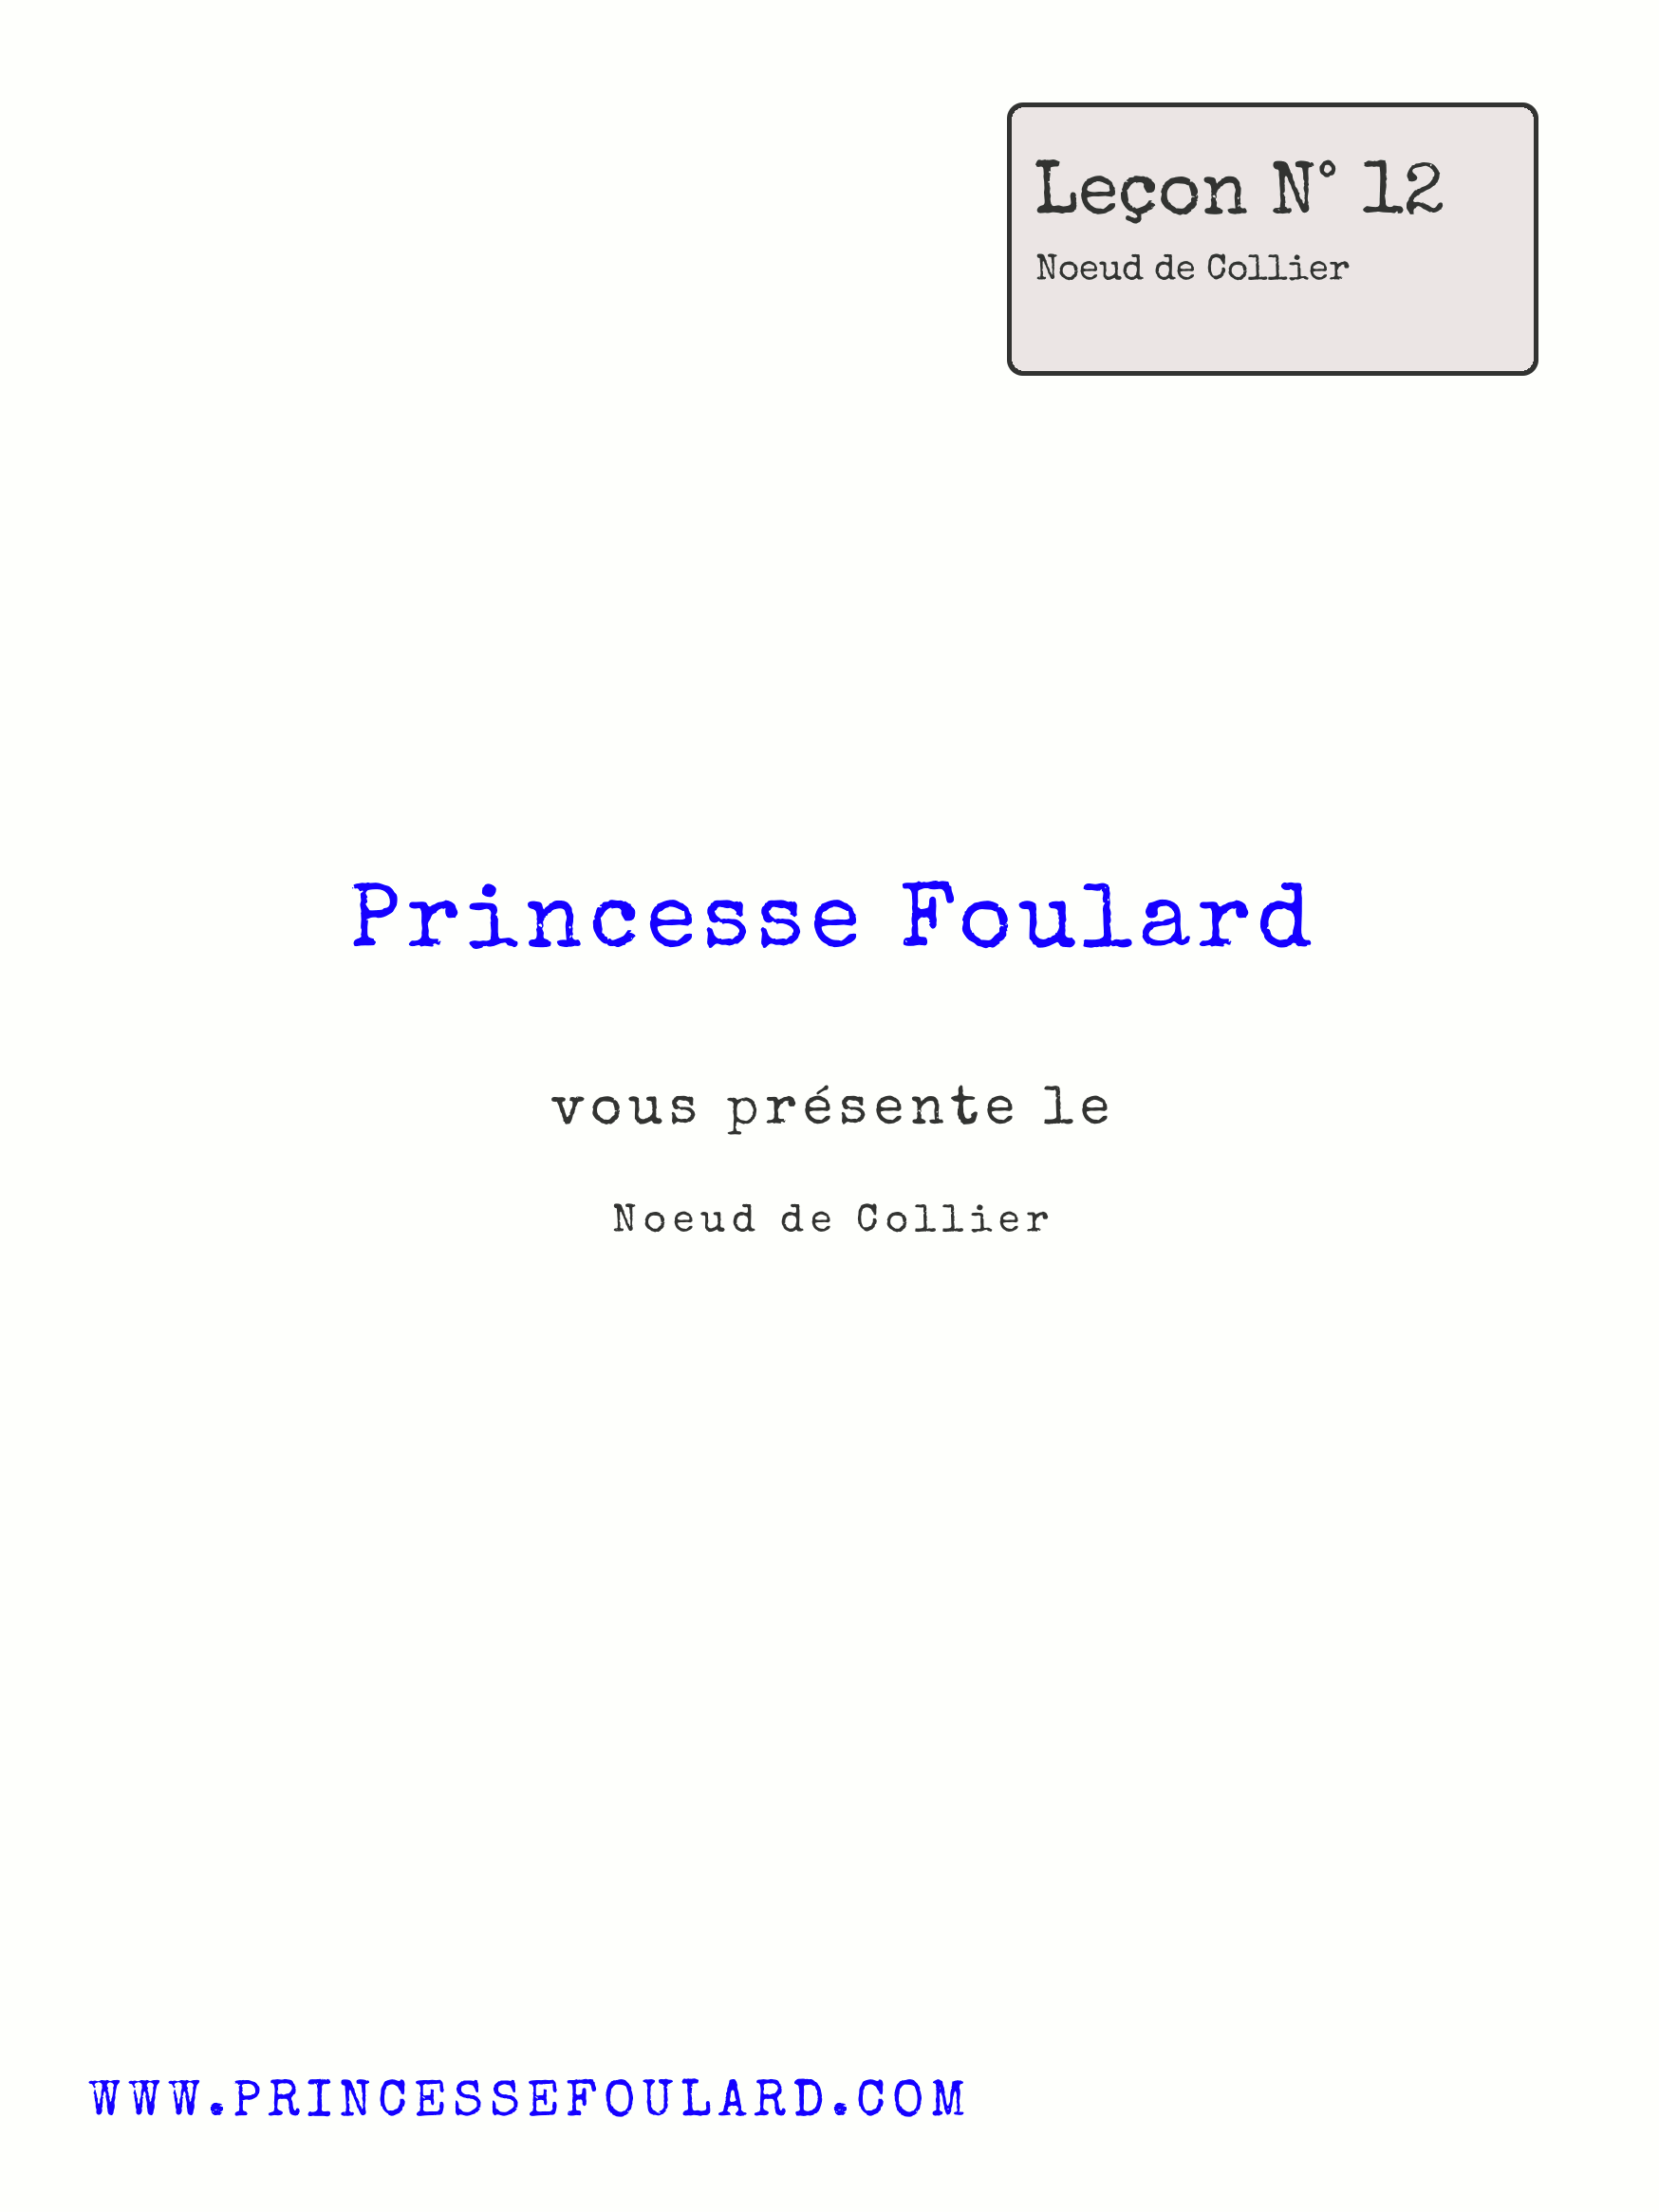 Tuto Noeud de Foulard Cheche par "Princesse Foulard"